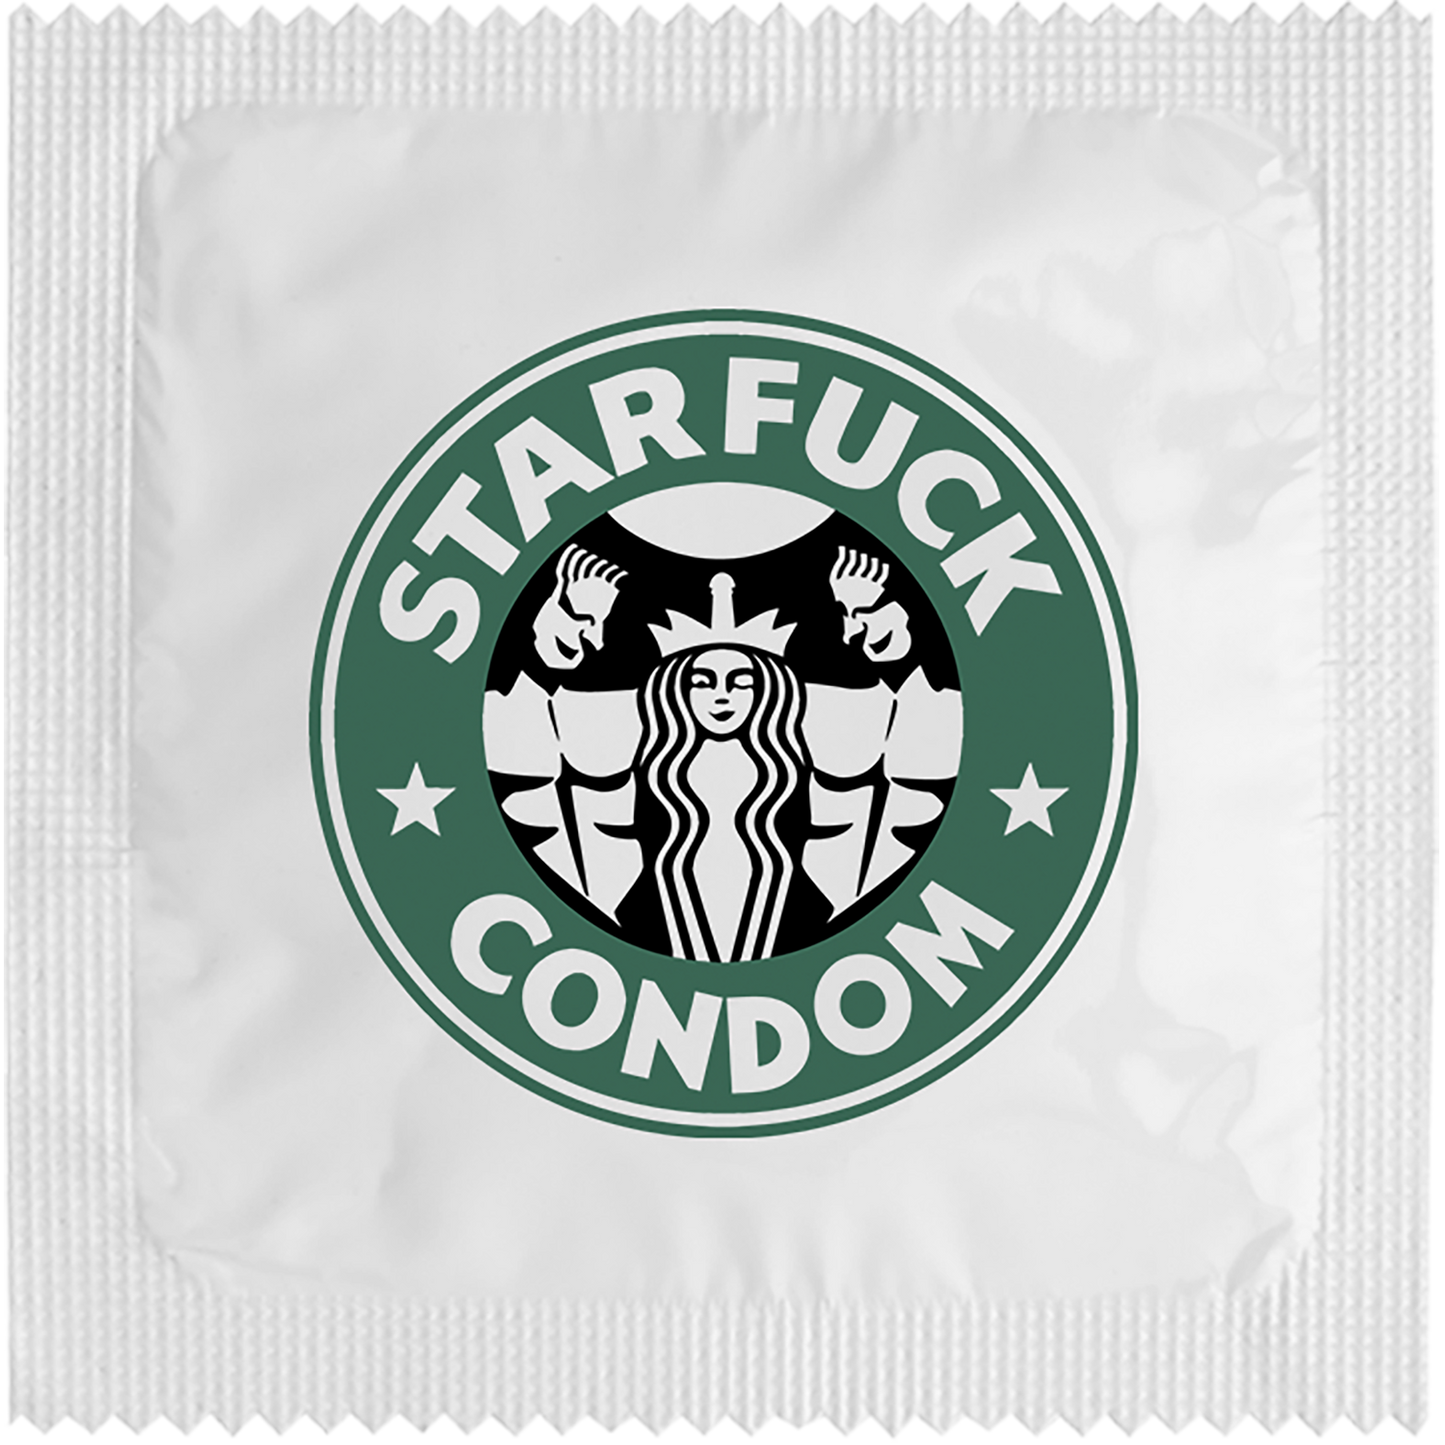 Image of funny condom "Starfuck"